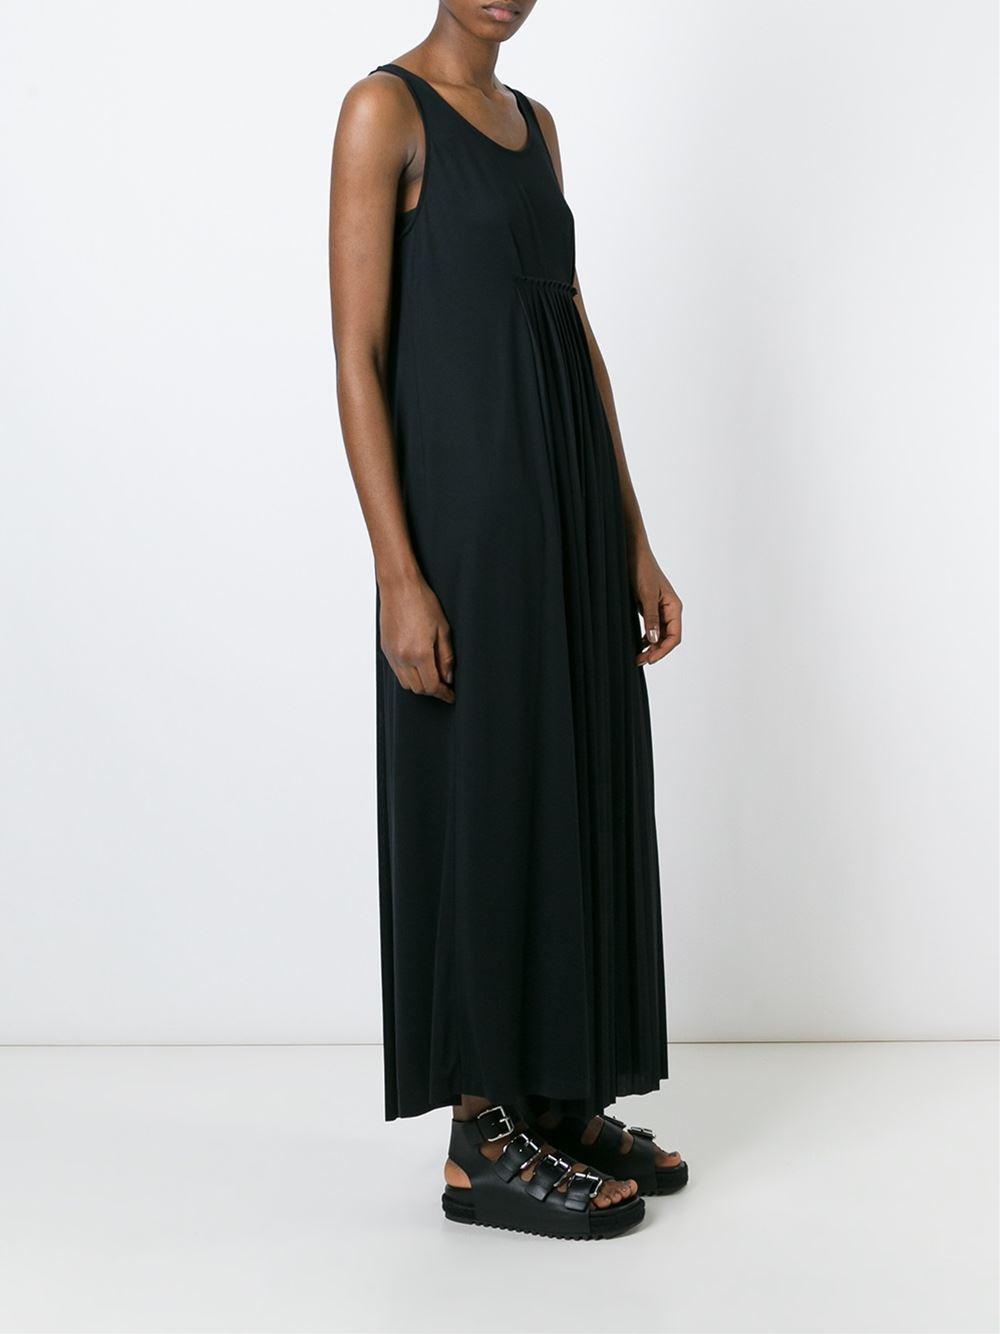 Mm6 by maison martin margiela Pleated Maxi Dress in Black | Lyst